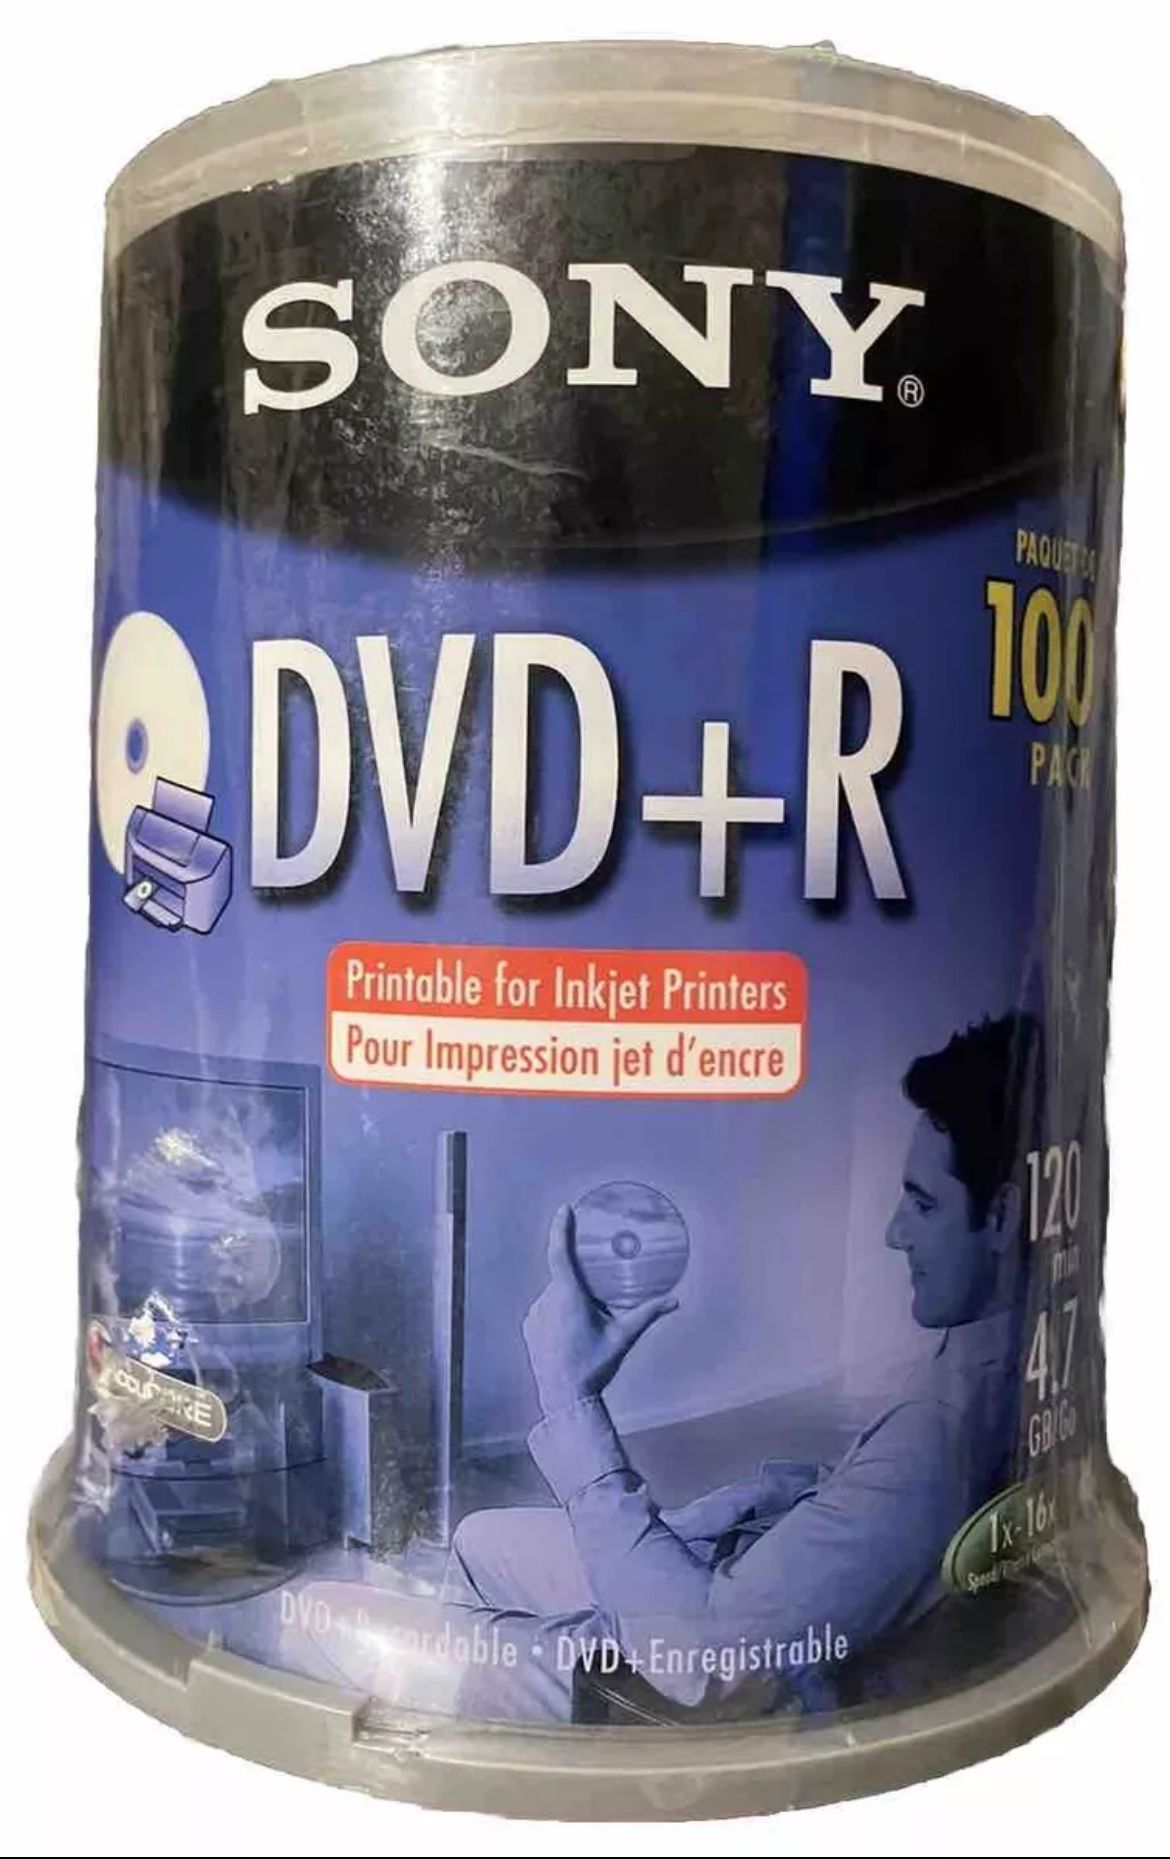 NEW 100PK Sony DVD+R 4.7GB 120min 1-16X Recordable Blank Video Discs